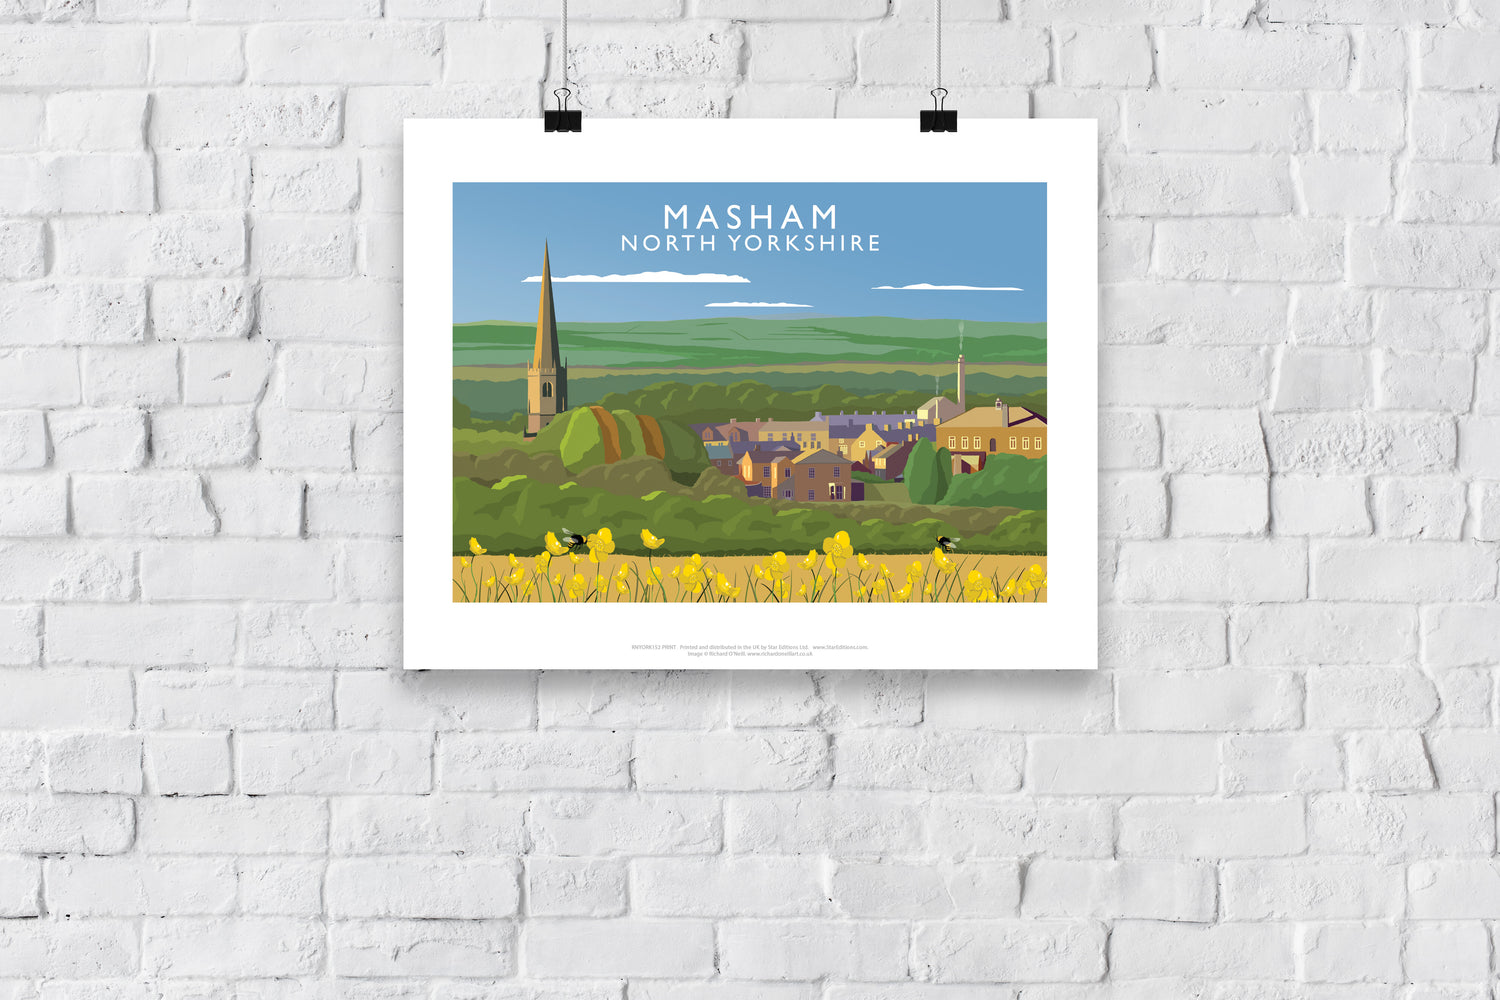 Masham, North Yorkshire - Art Print